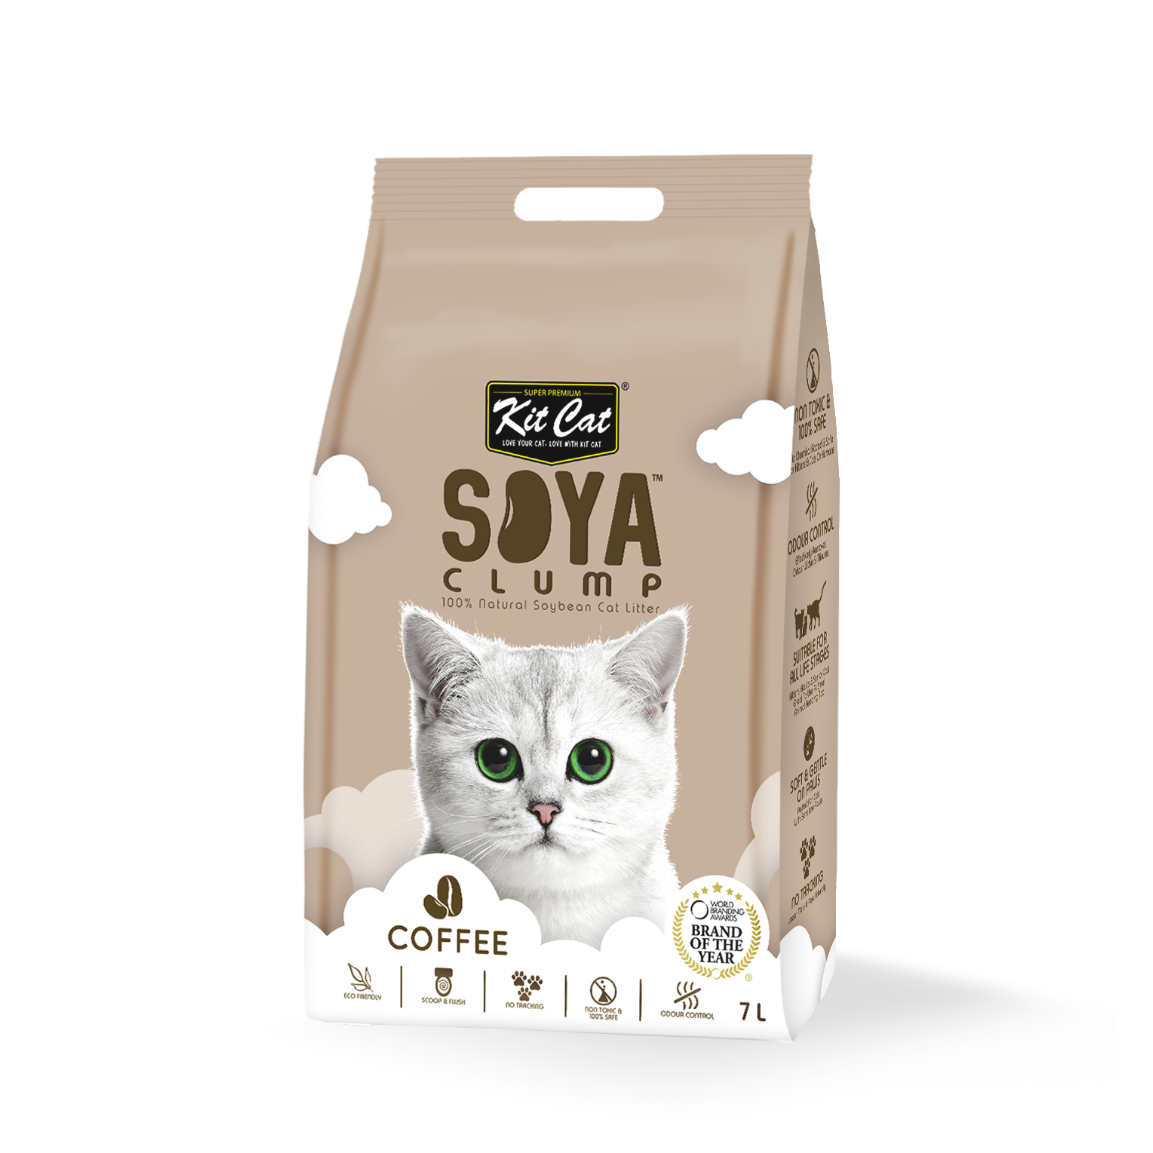 Kit Cat Soya Clump Cat Litter - Coffee